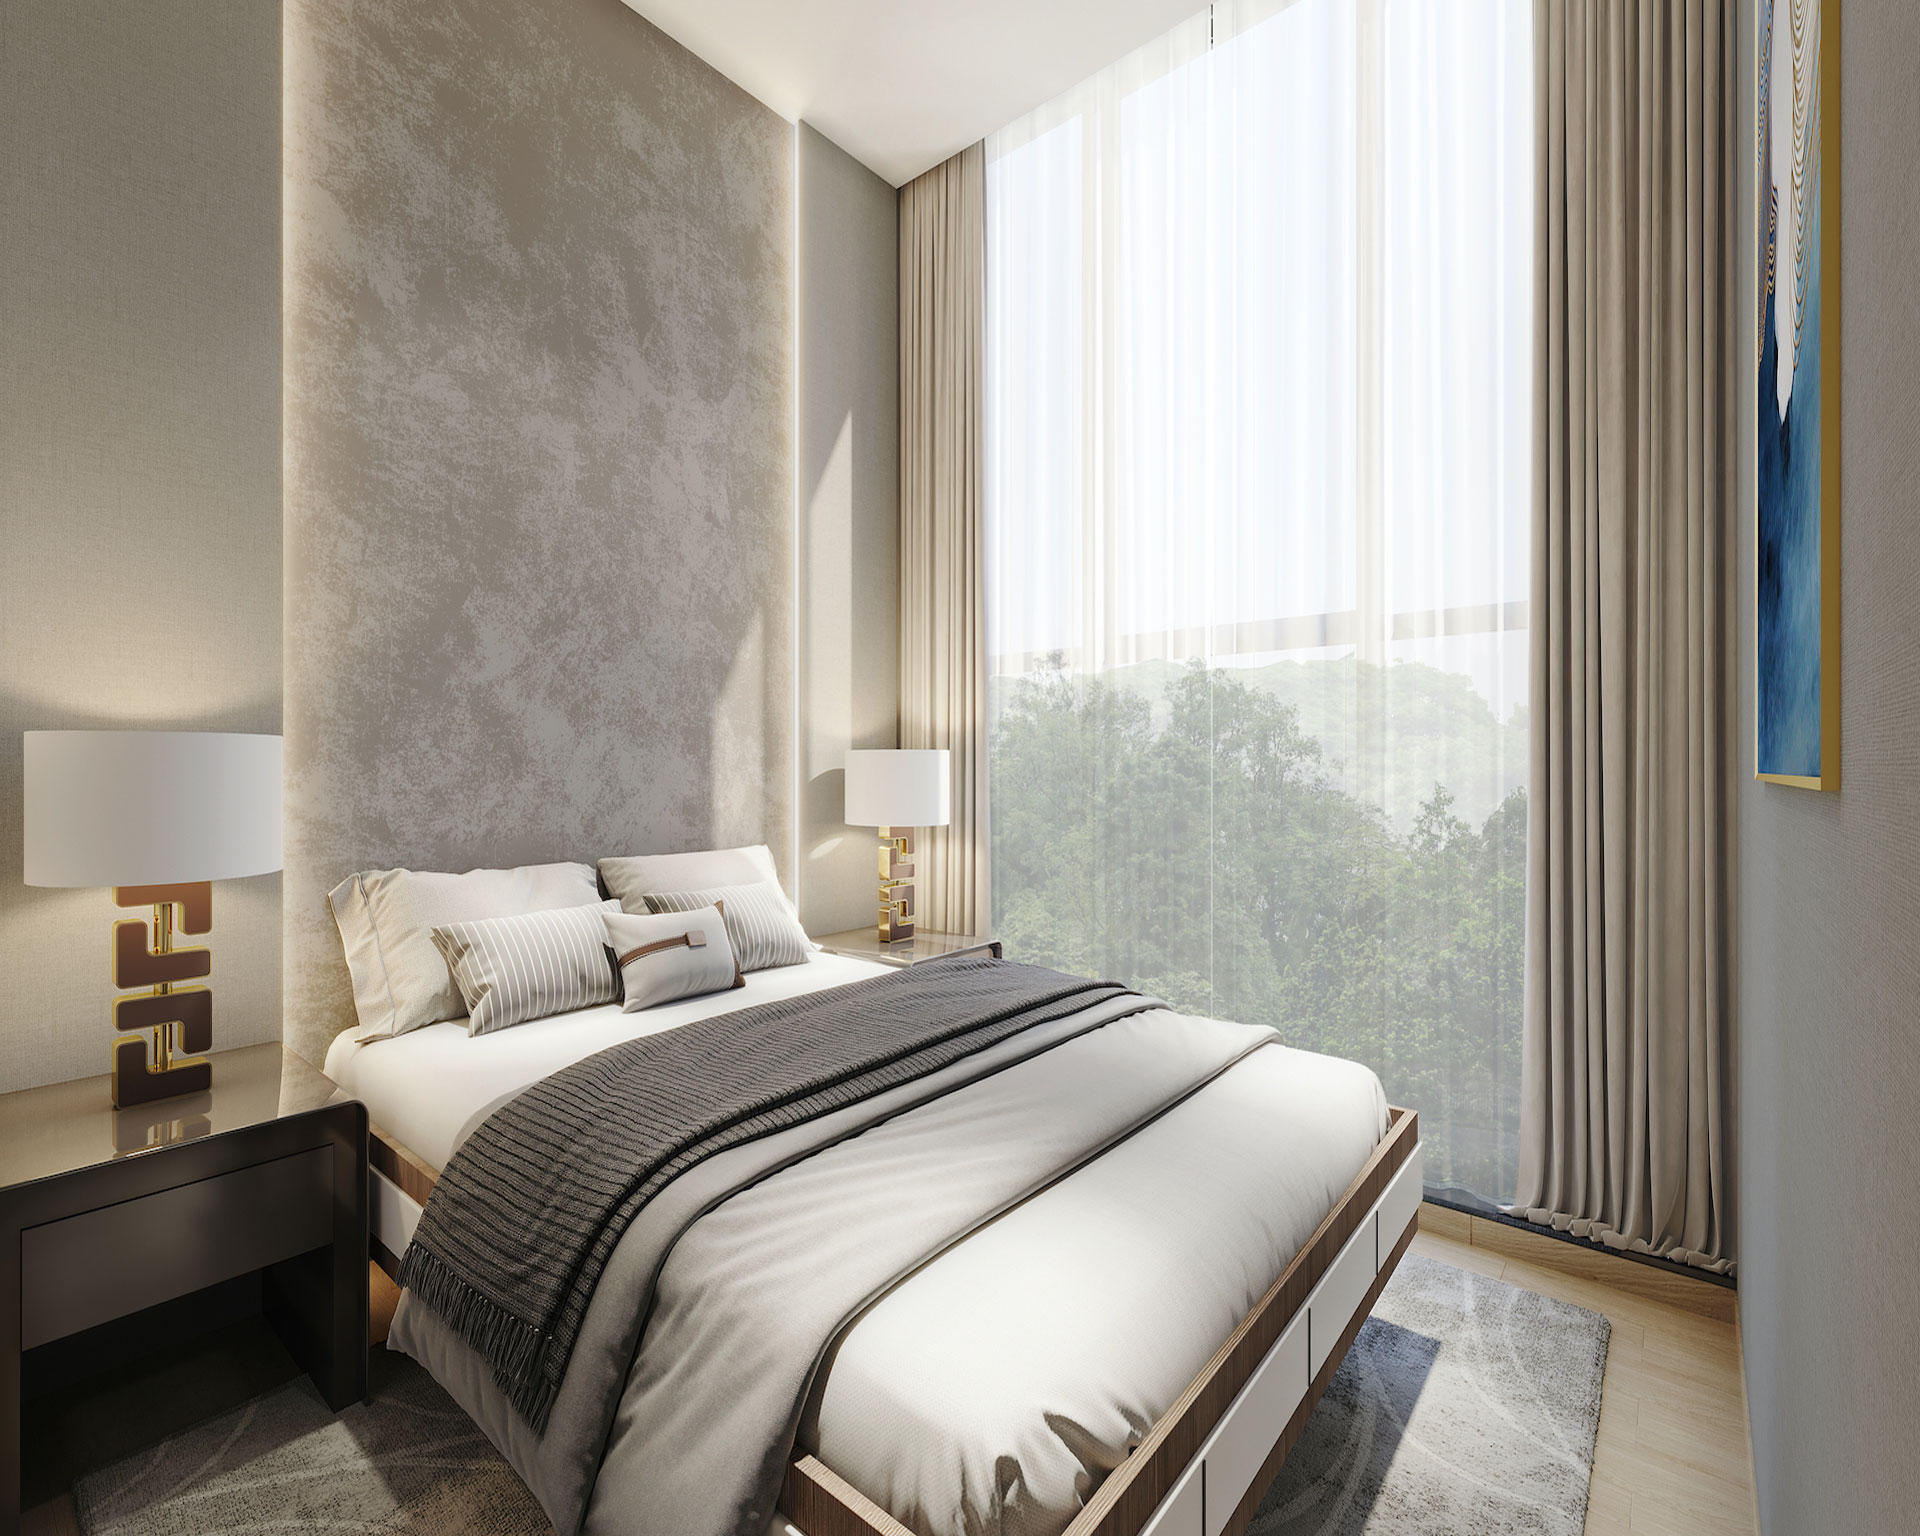 Zyanya Condo 2bedroom: illustration of bedroom design